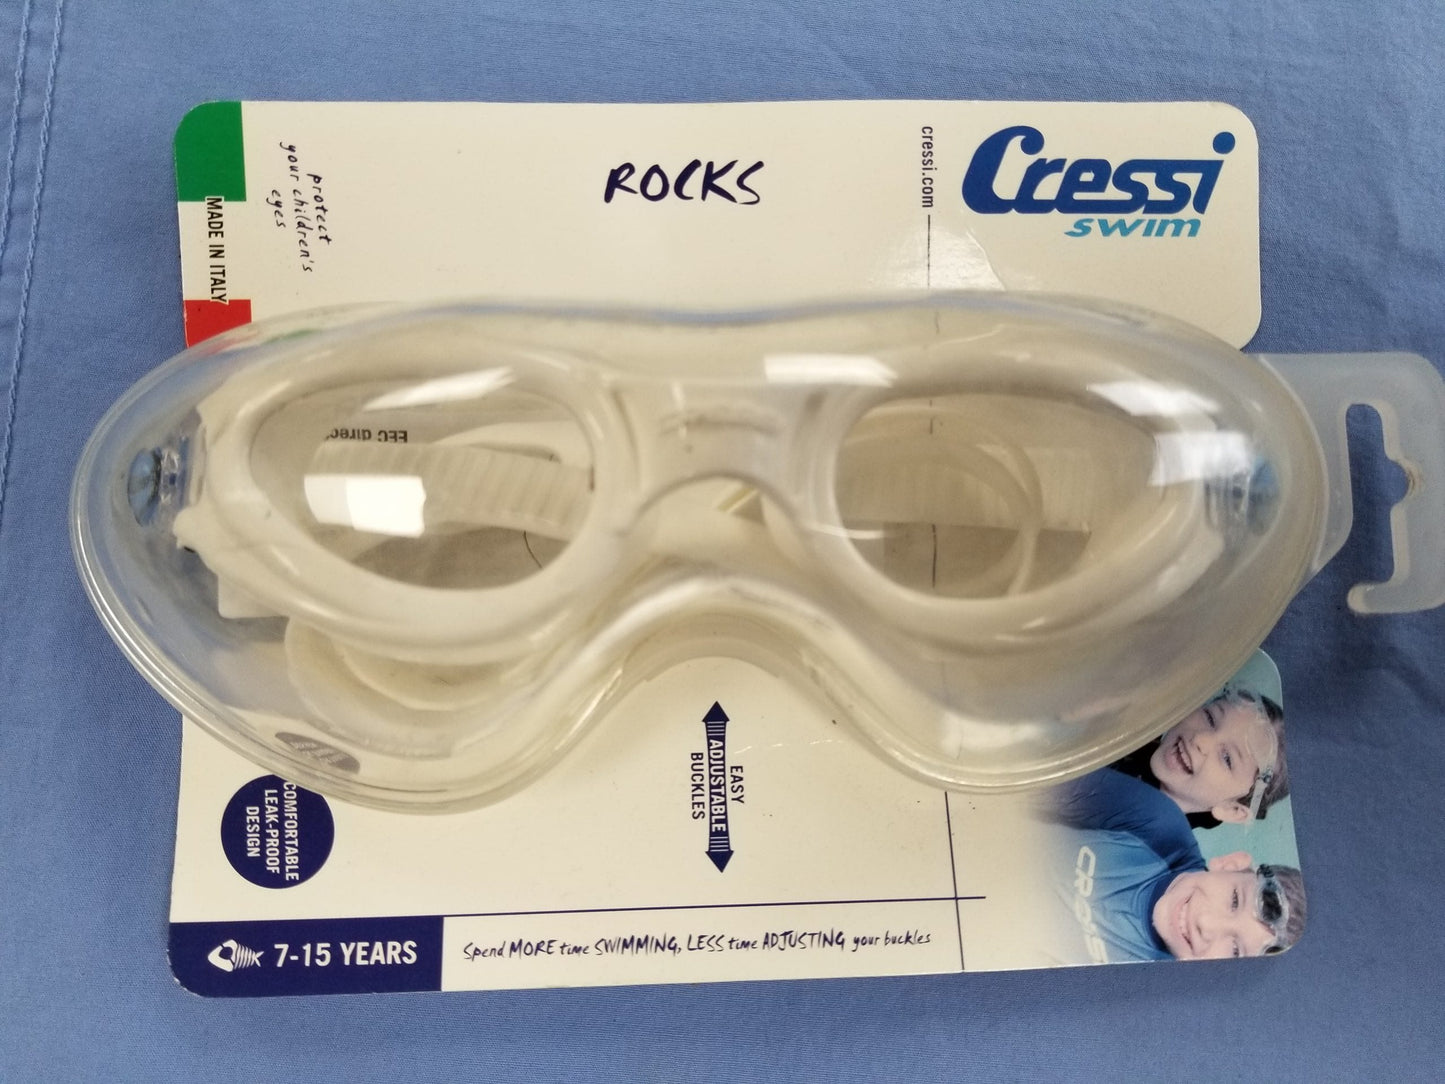 Cressi Rocks Children's Swim Goggles